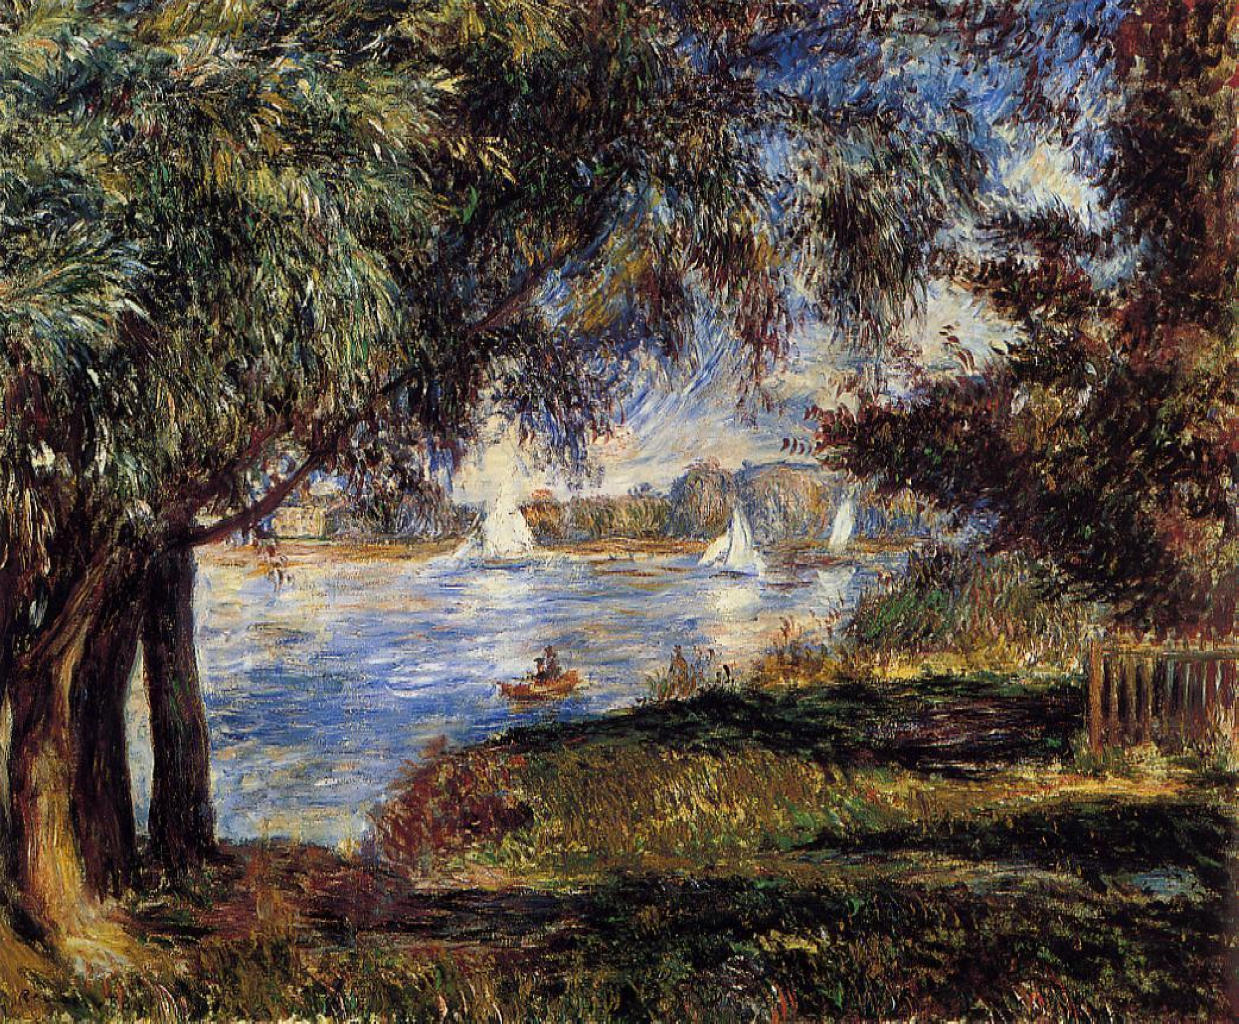 Bougival - Pierre-Auguste Renoir painting on canvas